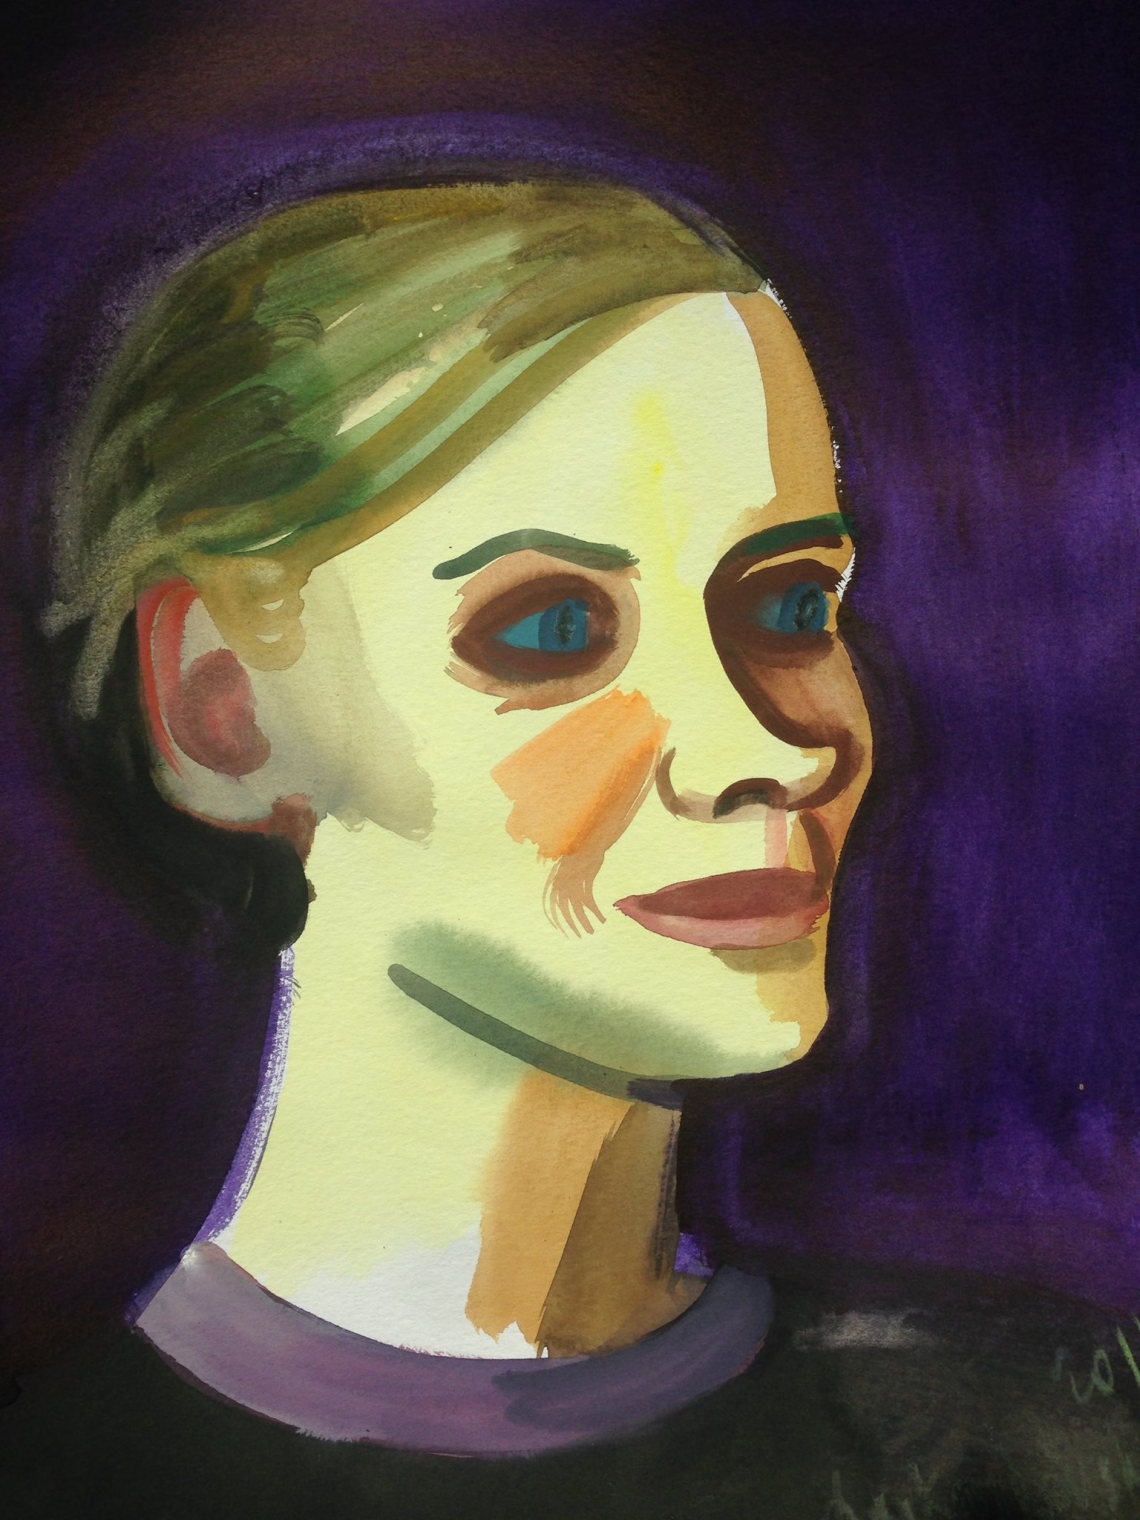 Anna Lukashevsky, "Margit", 2015